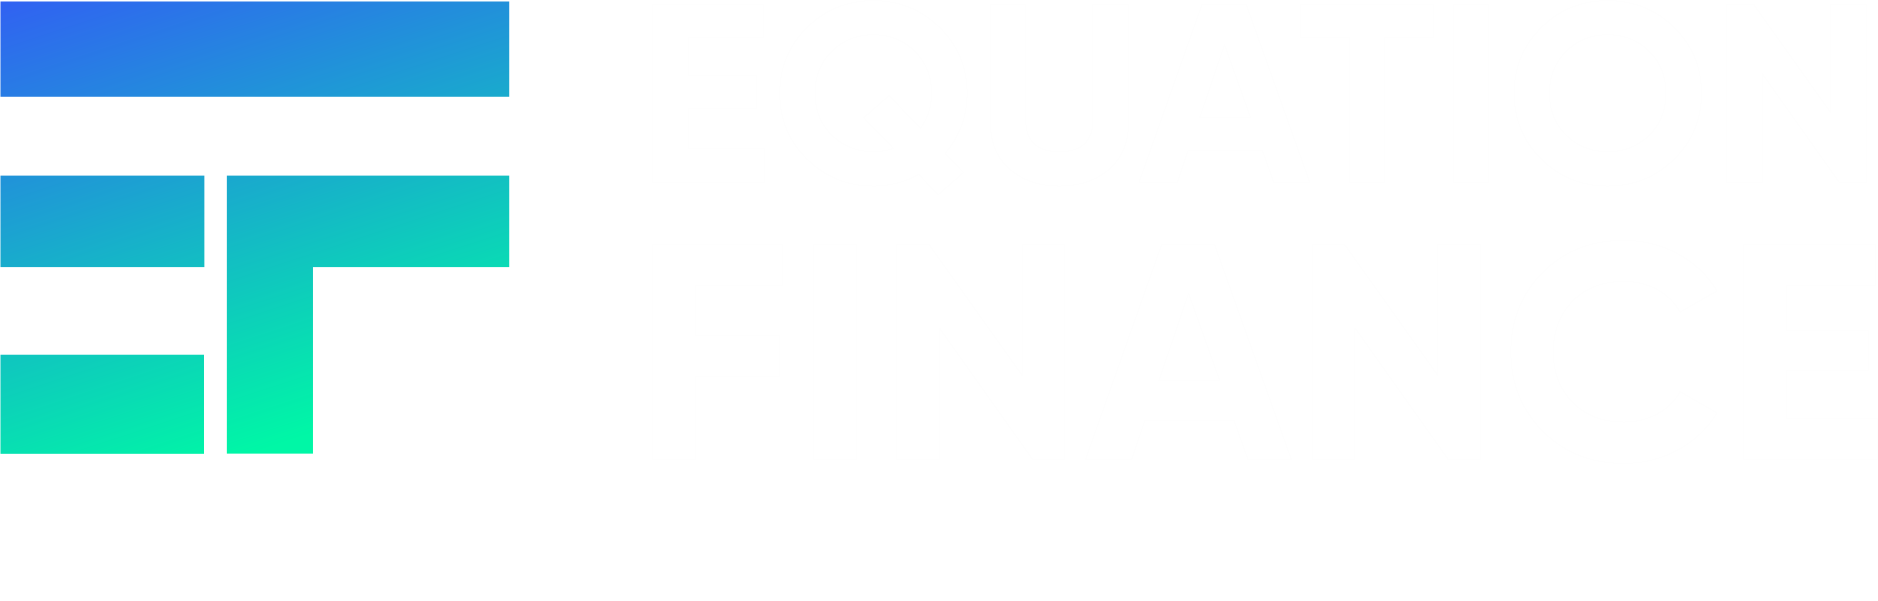 Equation-Finance